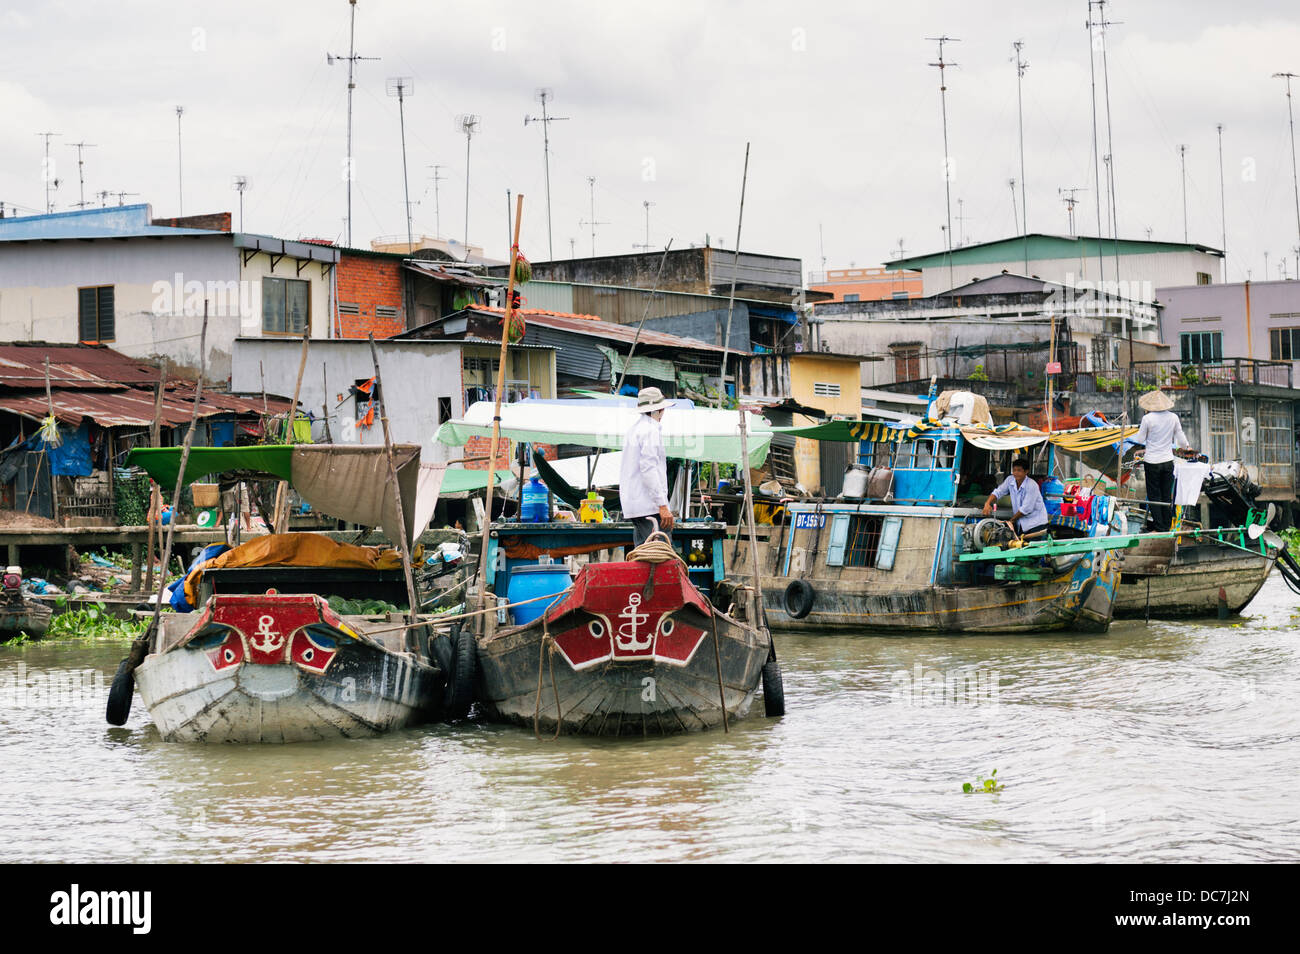 Mekong Delta, Vietnam - market traders' boats Stock Photo